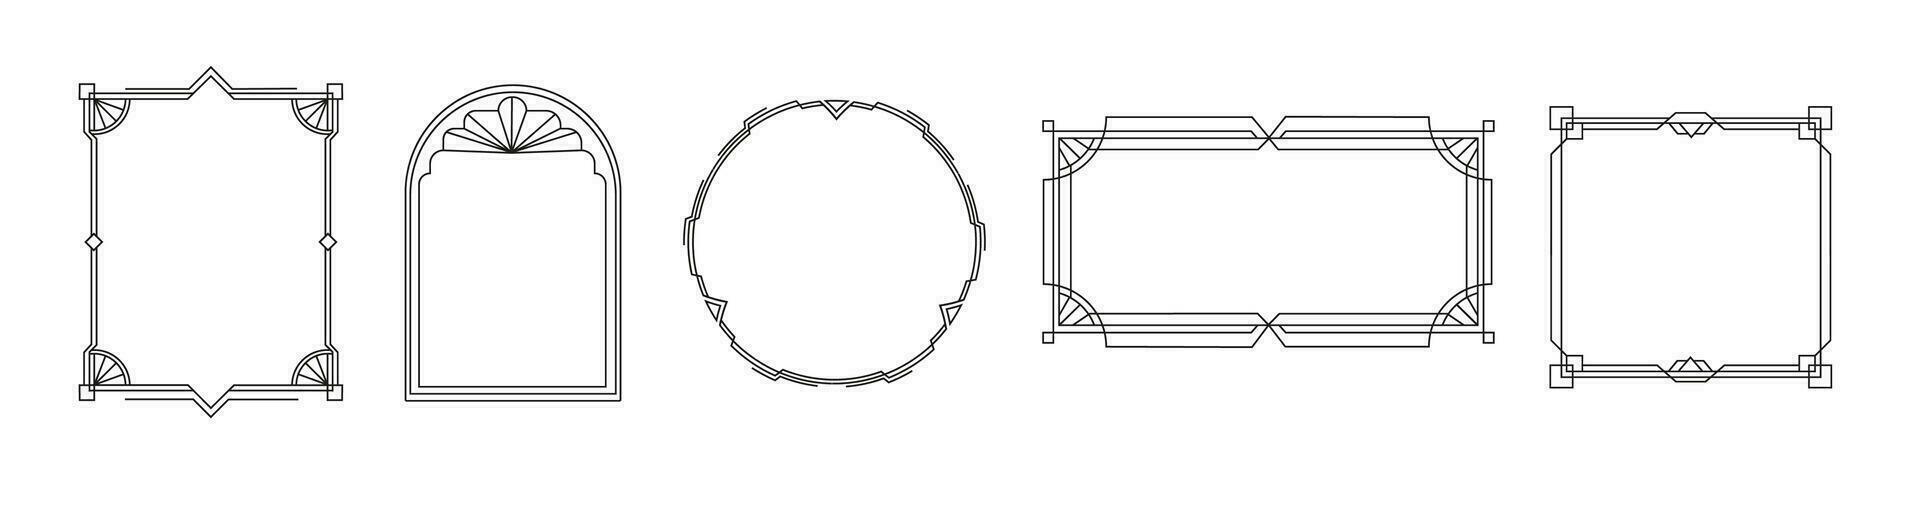 Art deco frame vector design. Square and rectangular modern